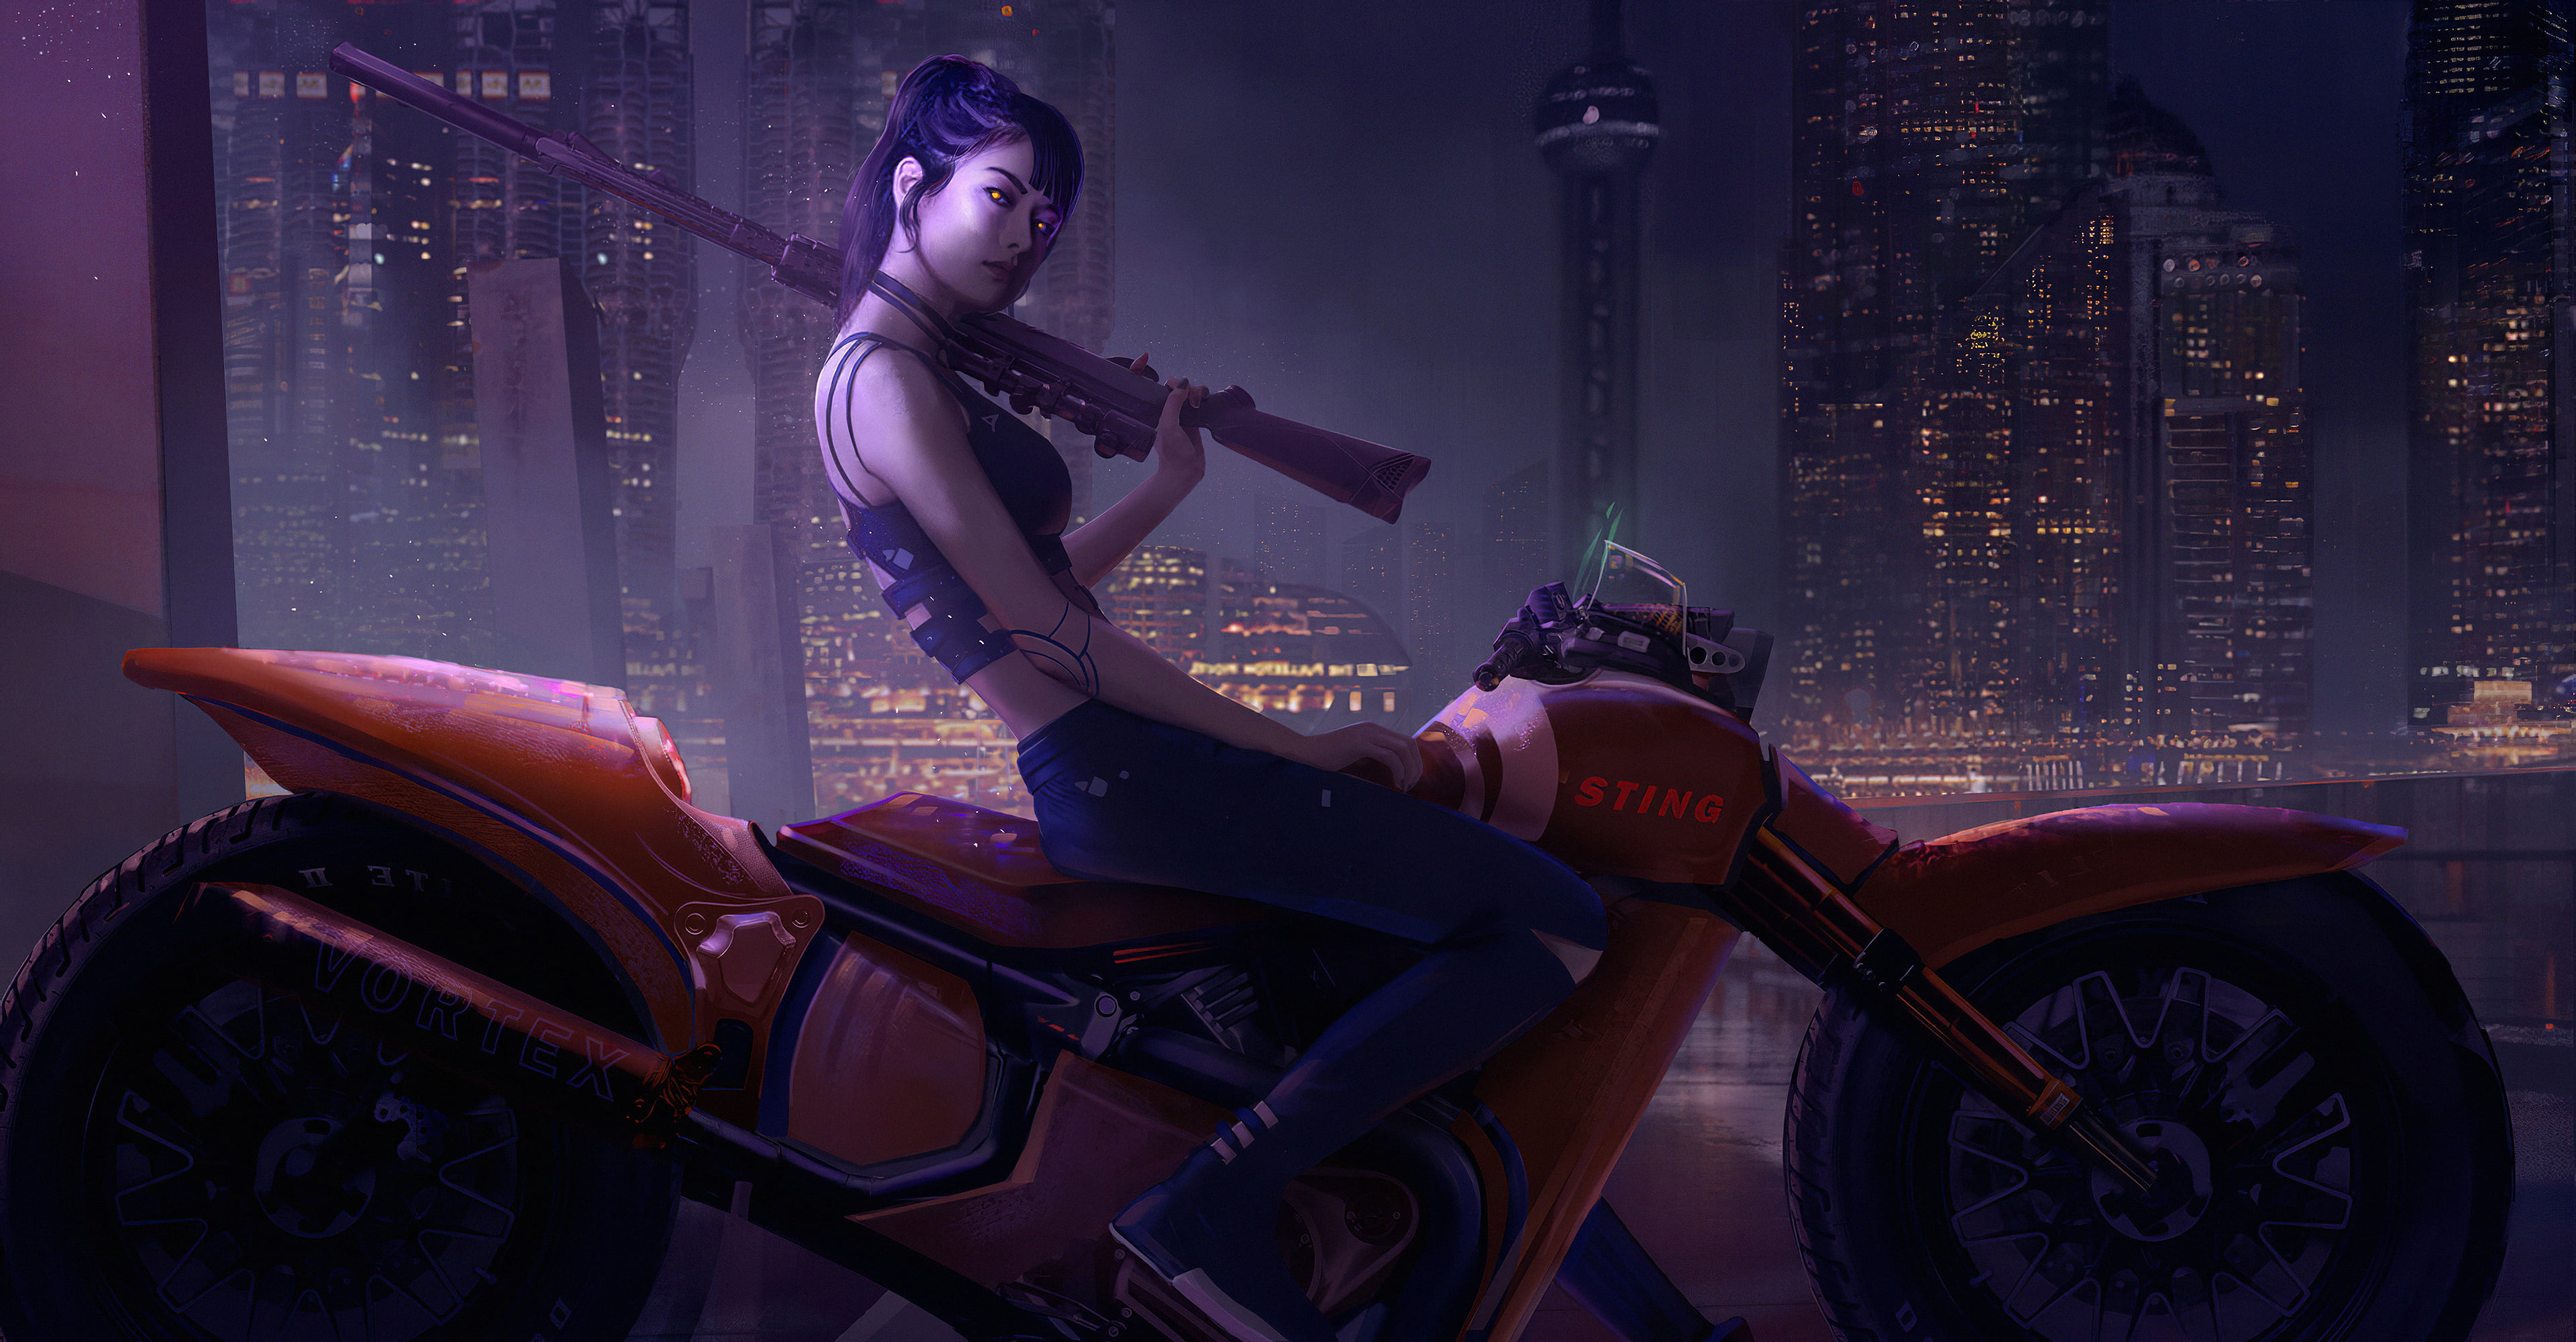 Sci Fi, Cyberpunk, City, Futuristic, Girl, Motorcycle, Weapon